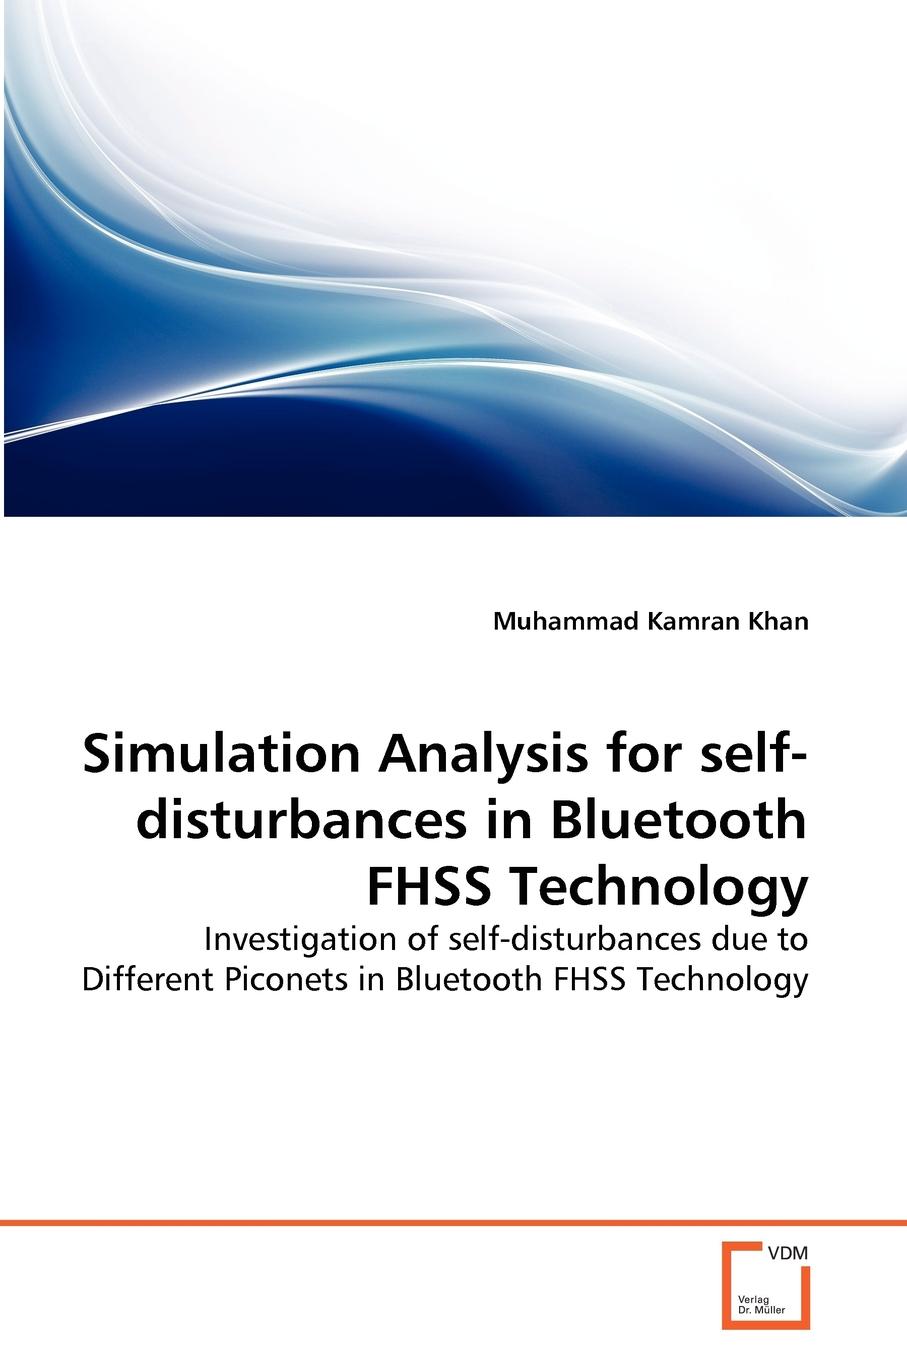 Simulation Analysis for self-disturbances in Bluetooth FHSS Technology